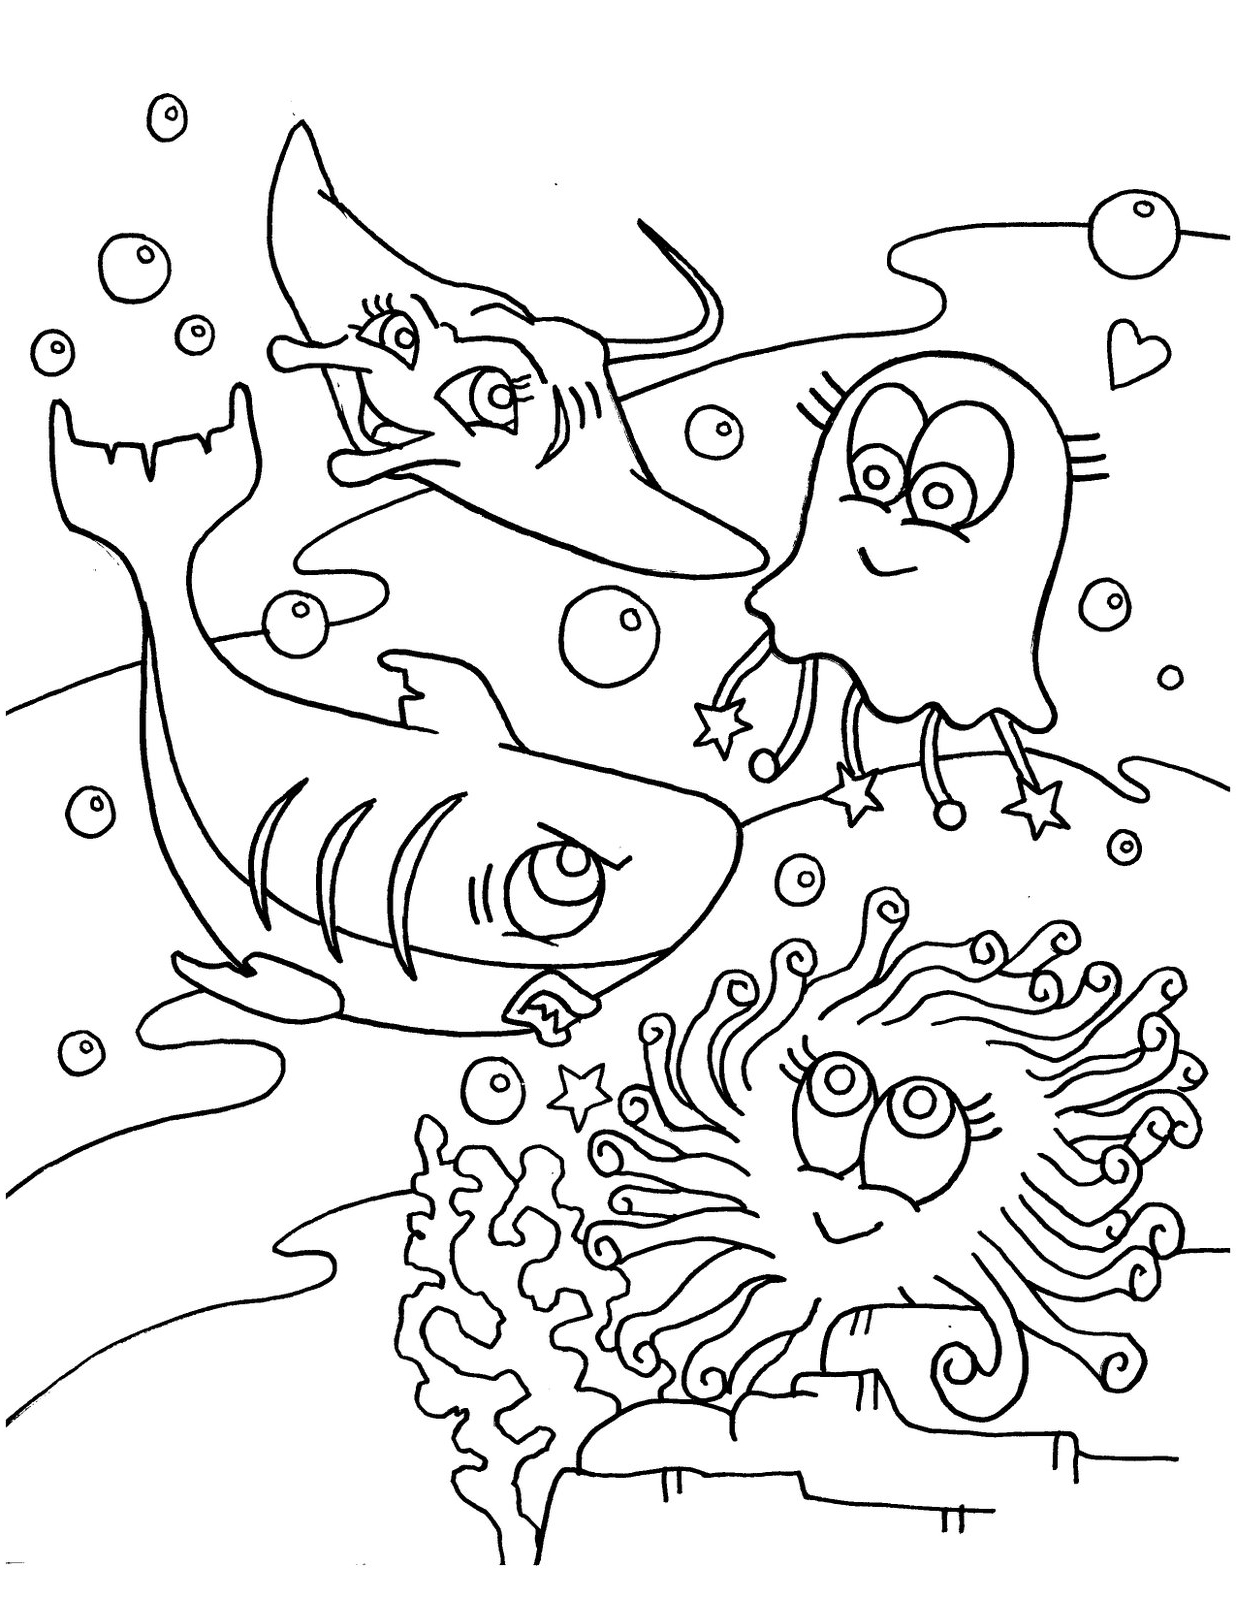 Cute S Of Sea Animals8e91 Coloring Page